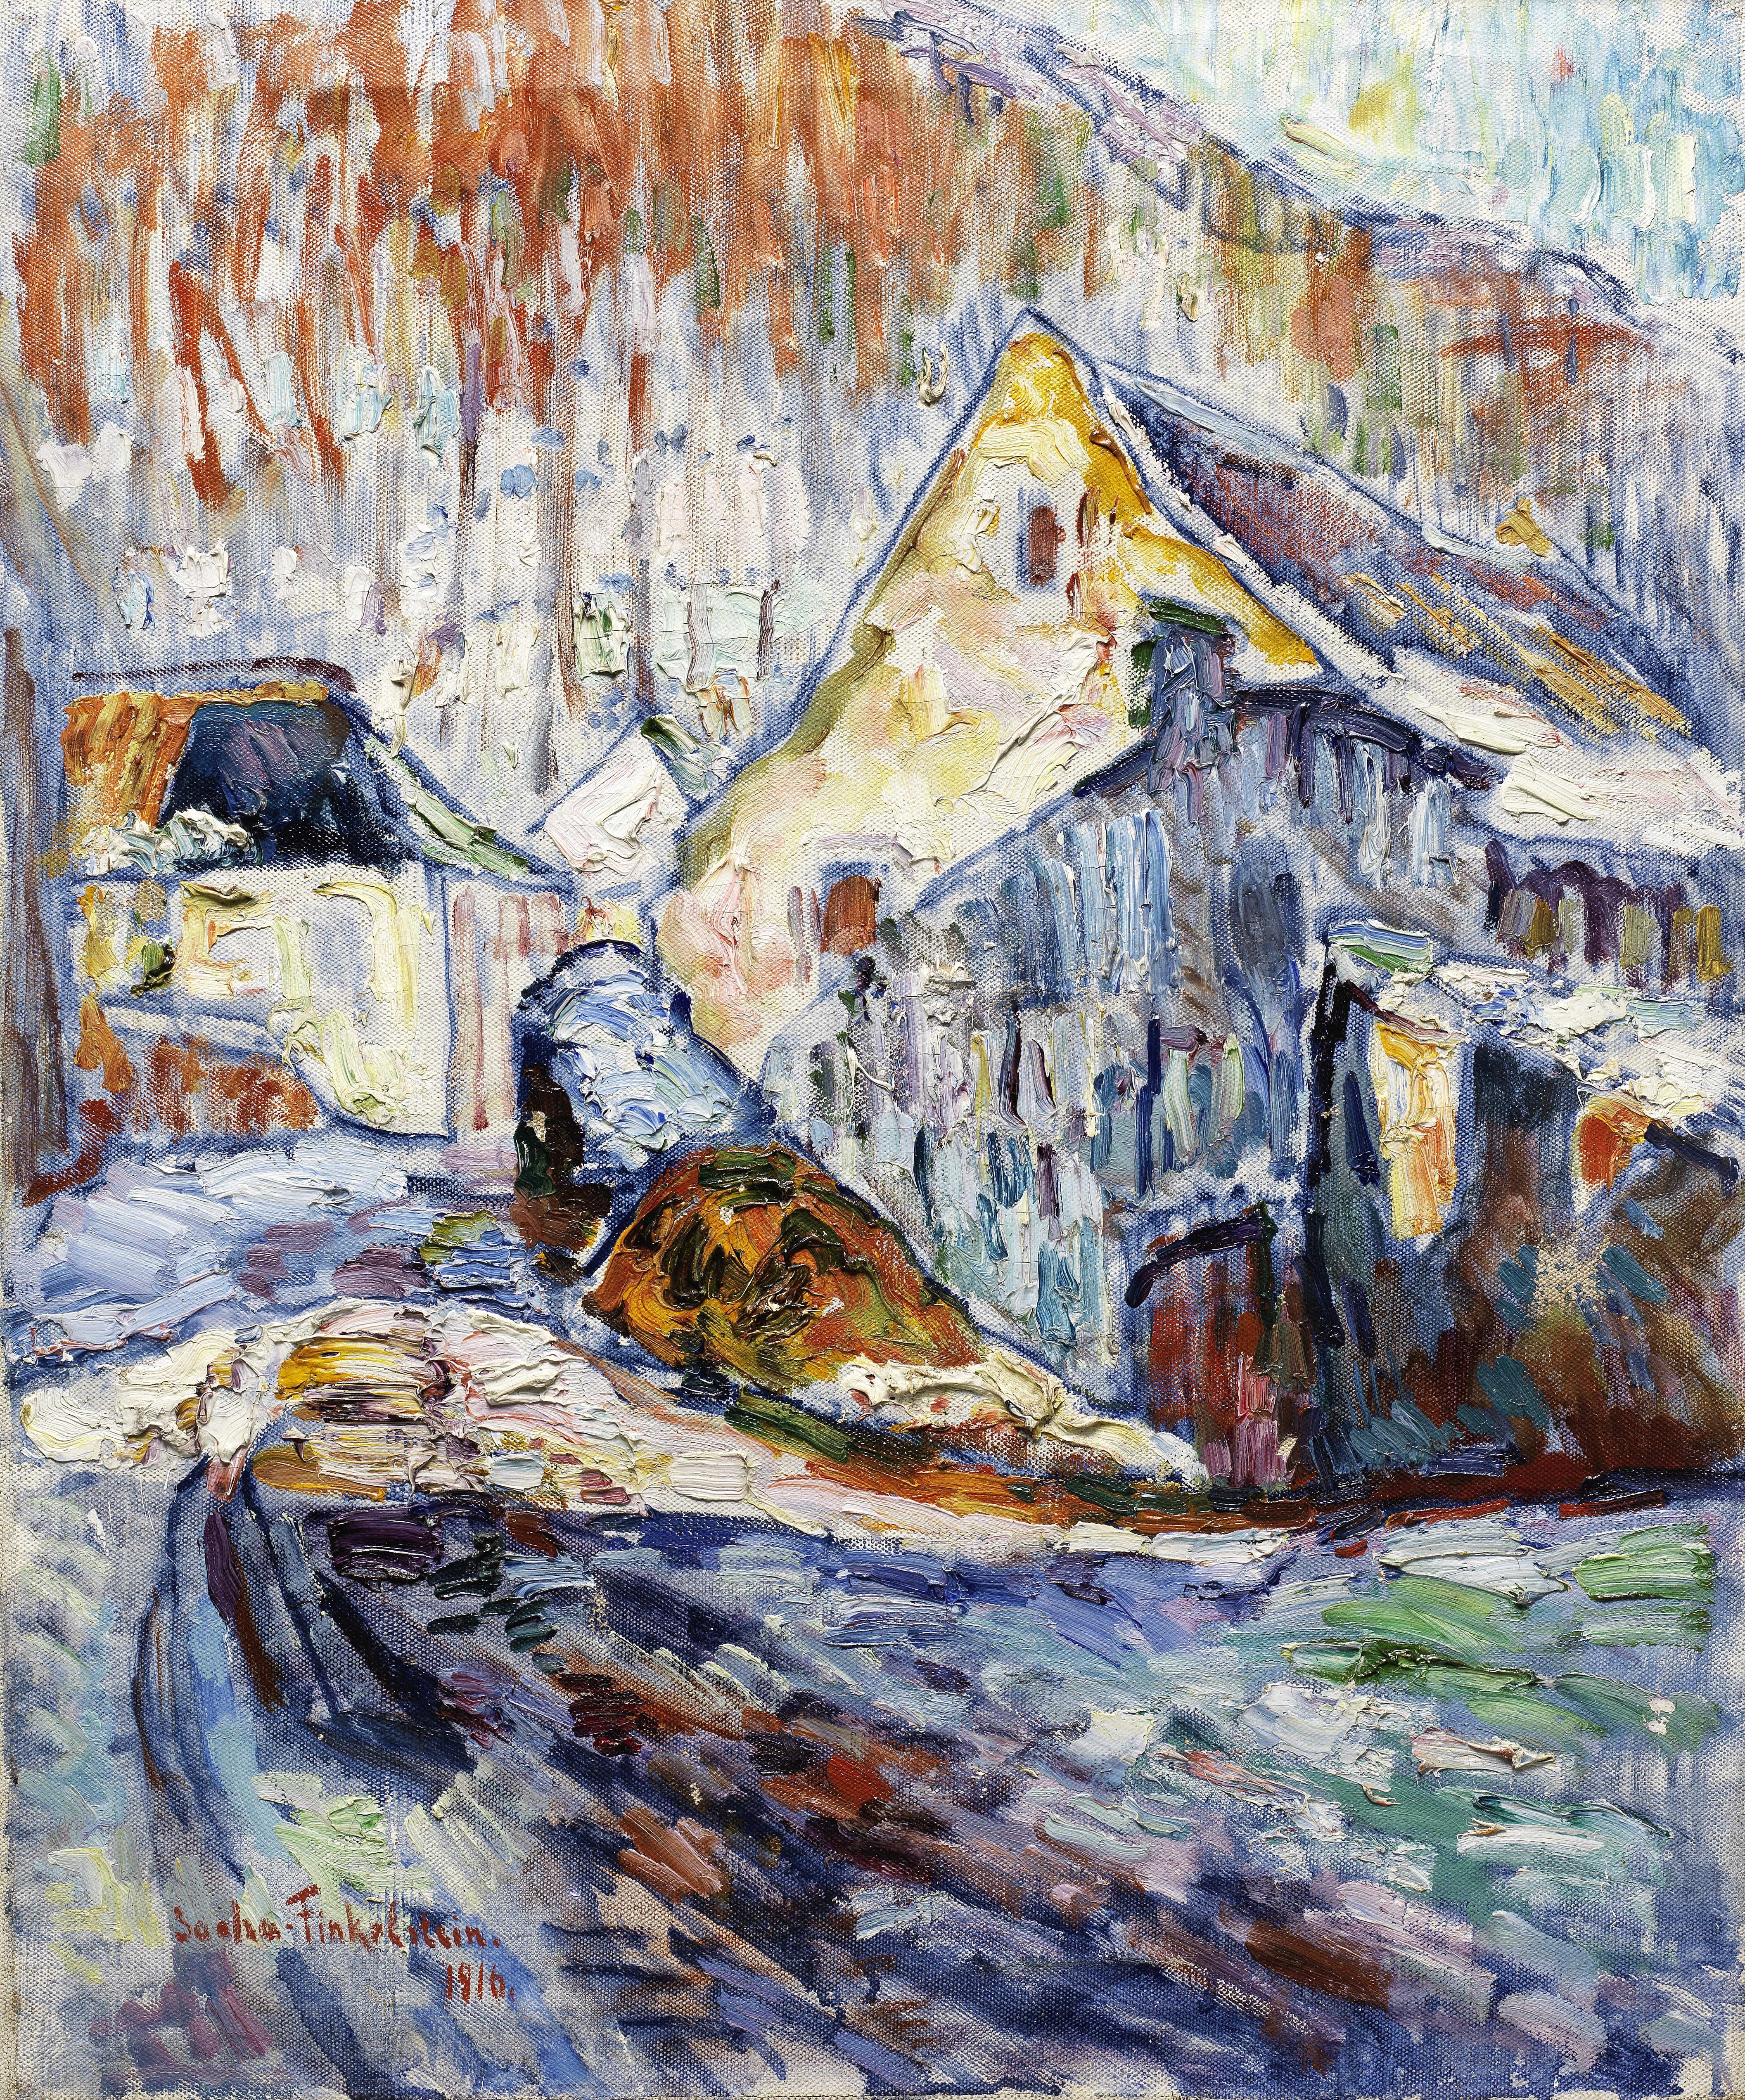 Sacha Finkelstein (Russian, 1878-1919) Winter Impression